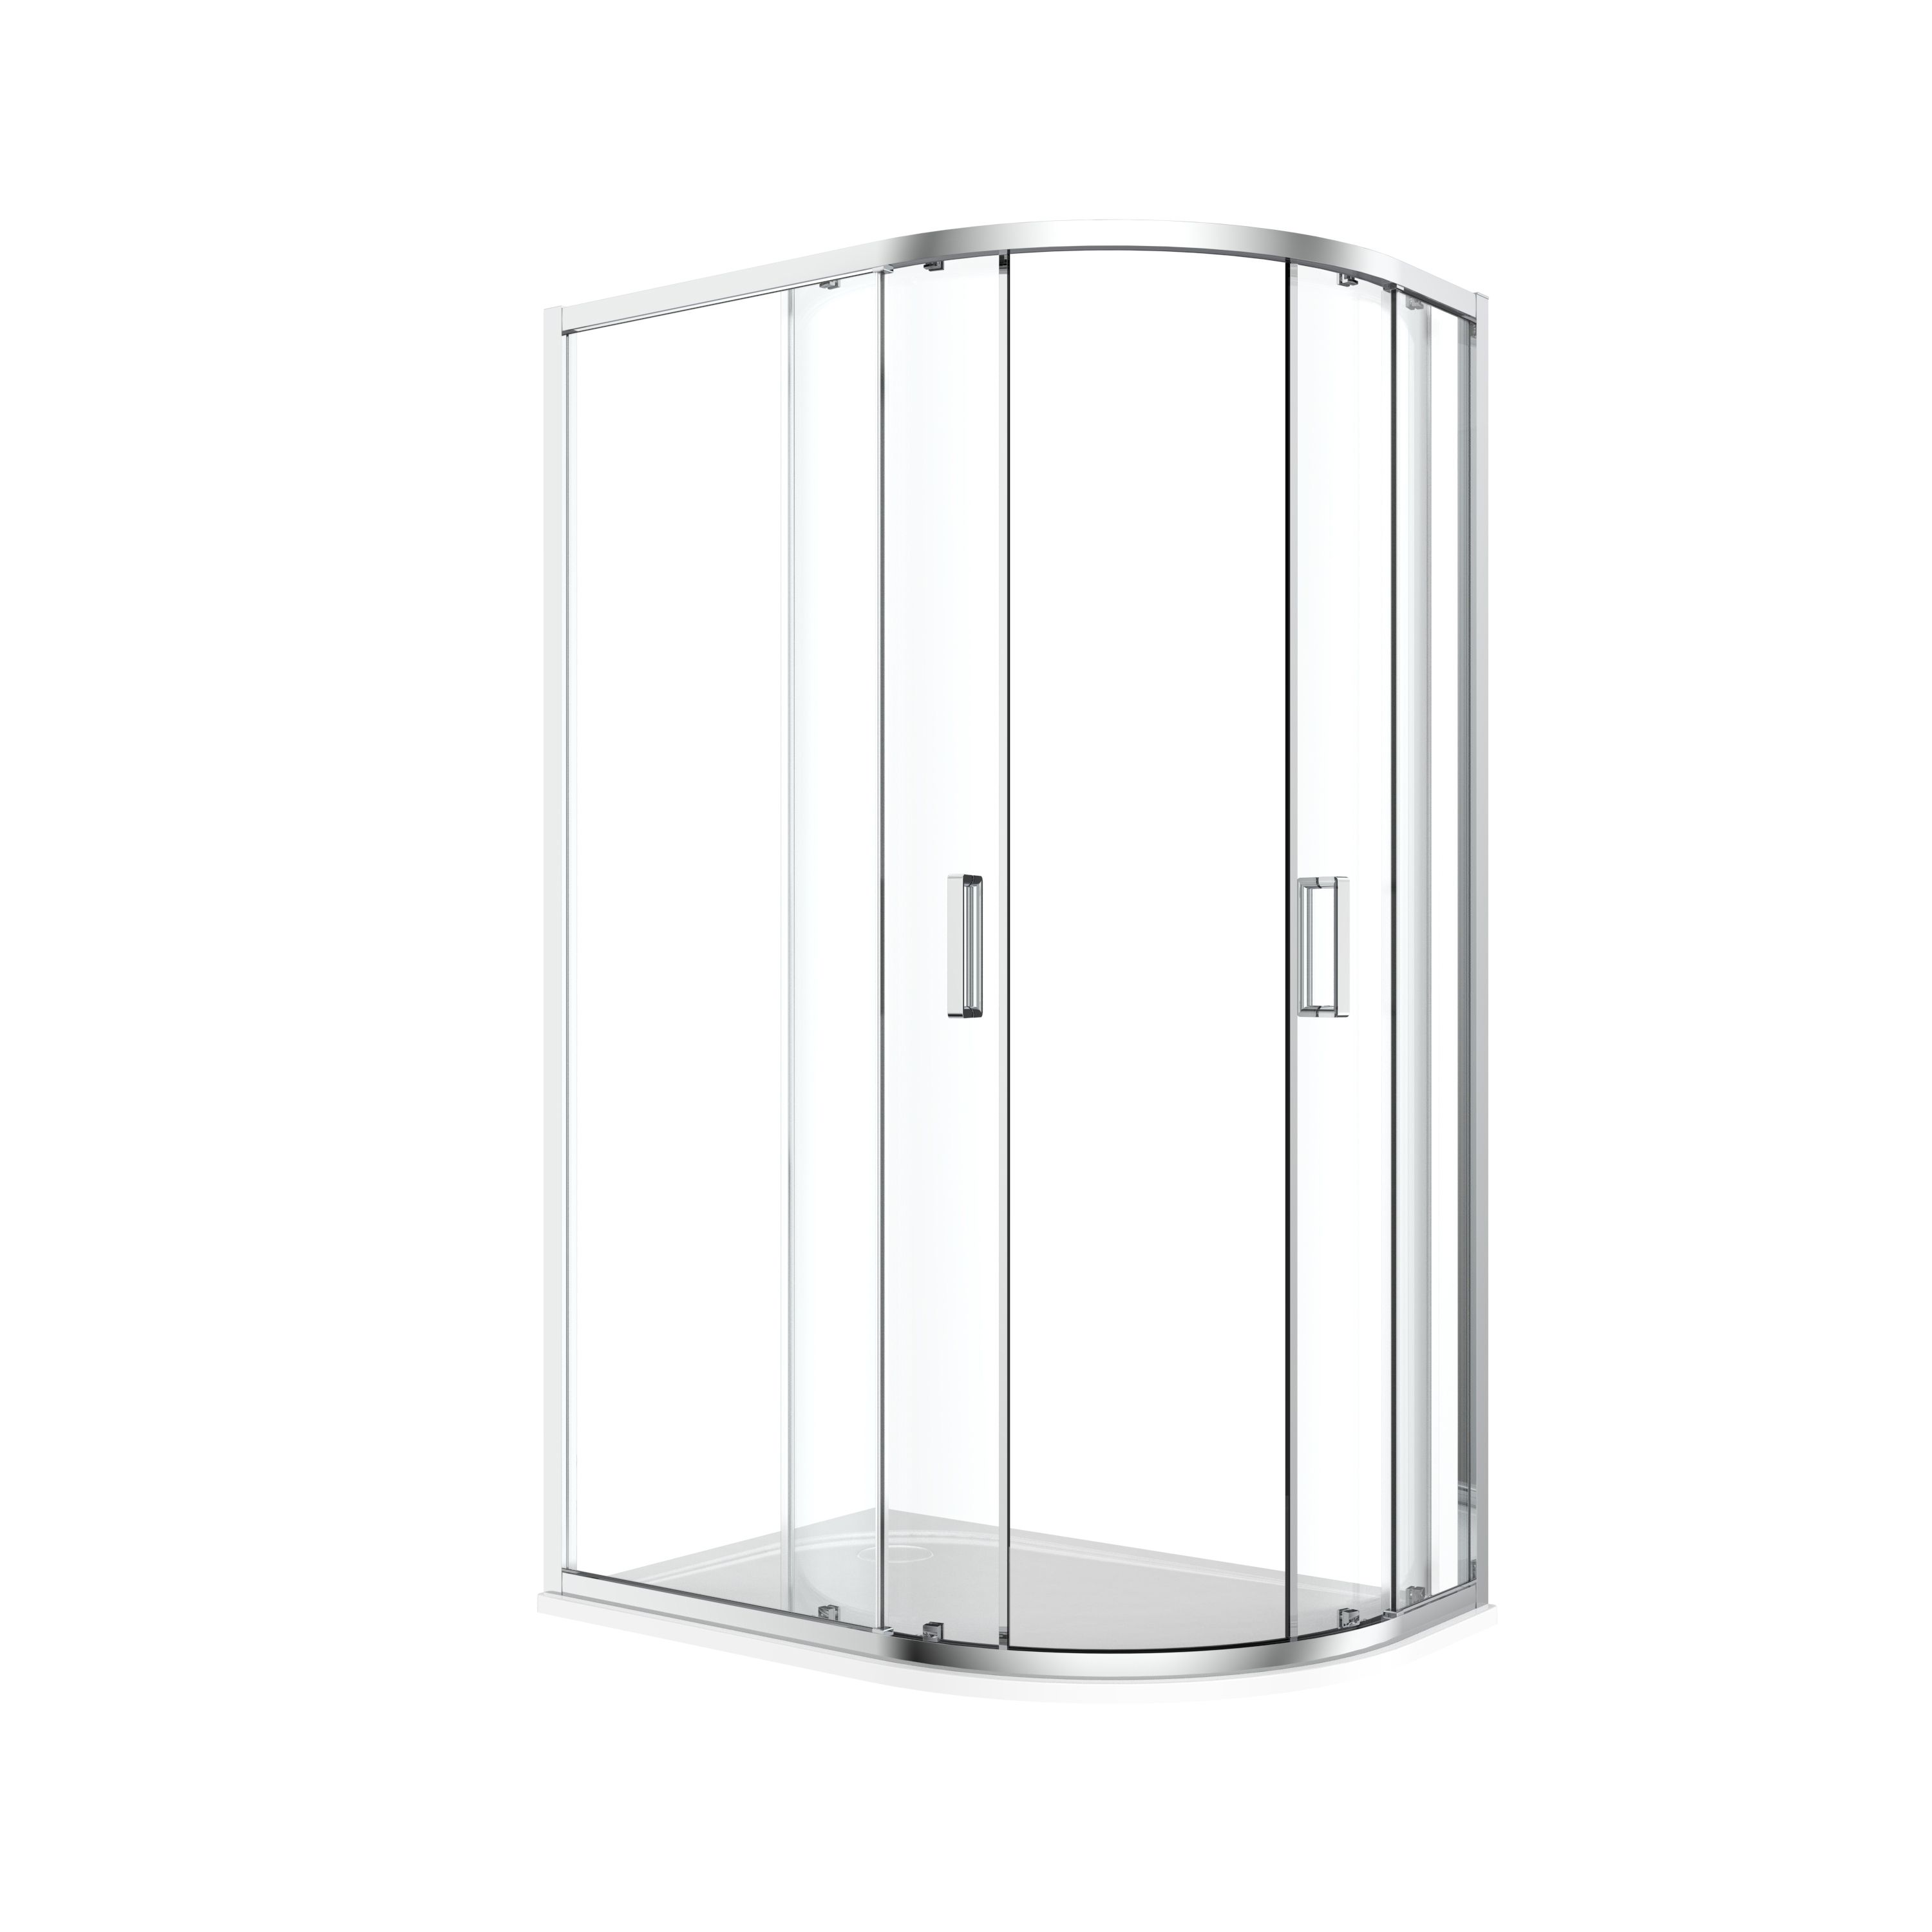 GoodHome Ledava Chrome effect Left-handed Offset quadrant Shower Enclosure & tray - Corner entry double sliding door (H)195cm (W)80cm (D)100cm